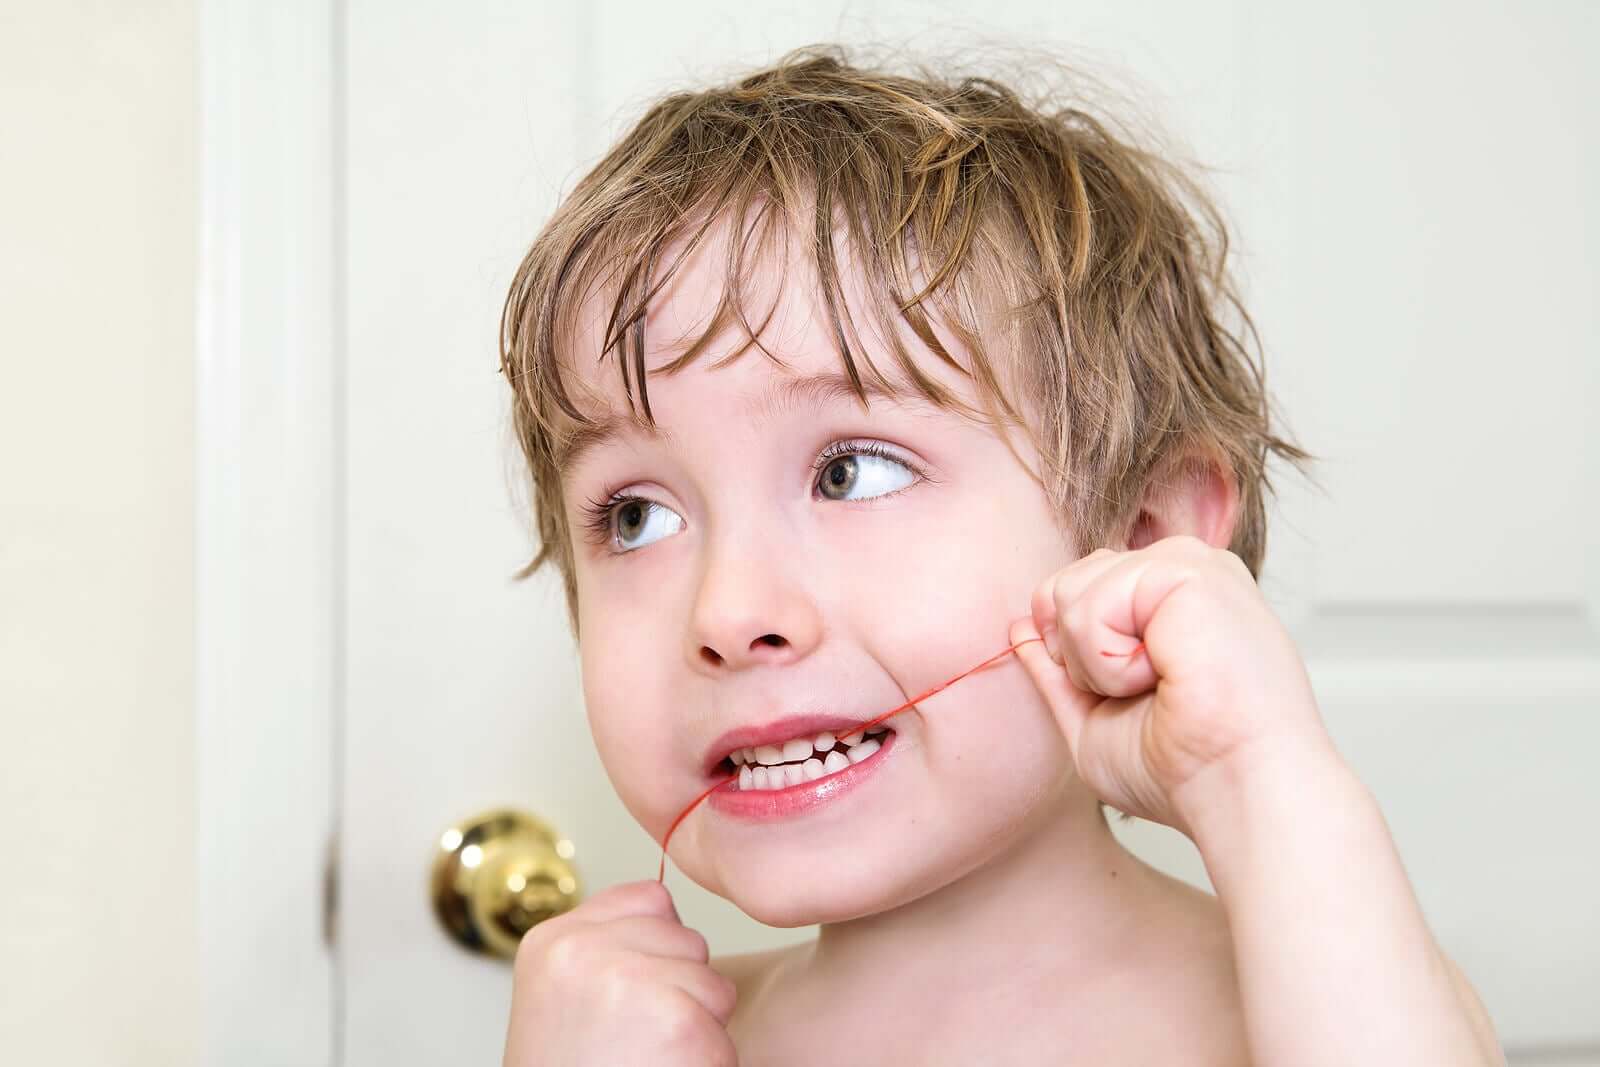 A little boy flossing his teeth.